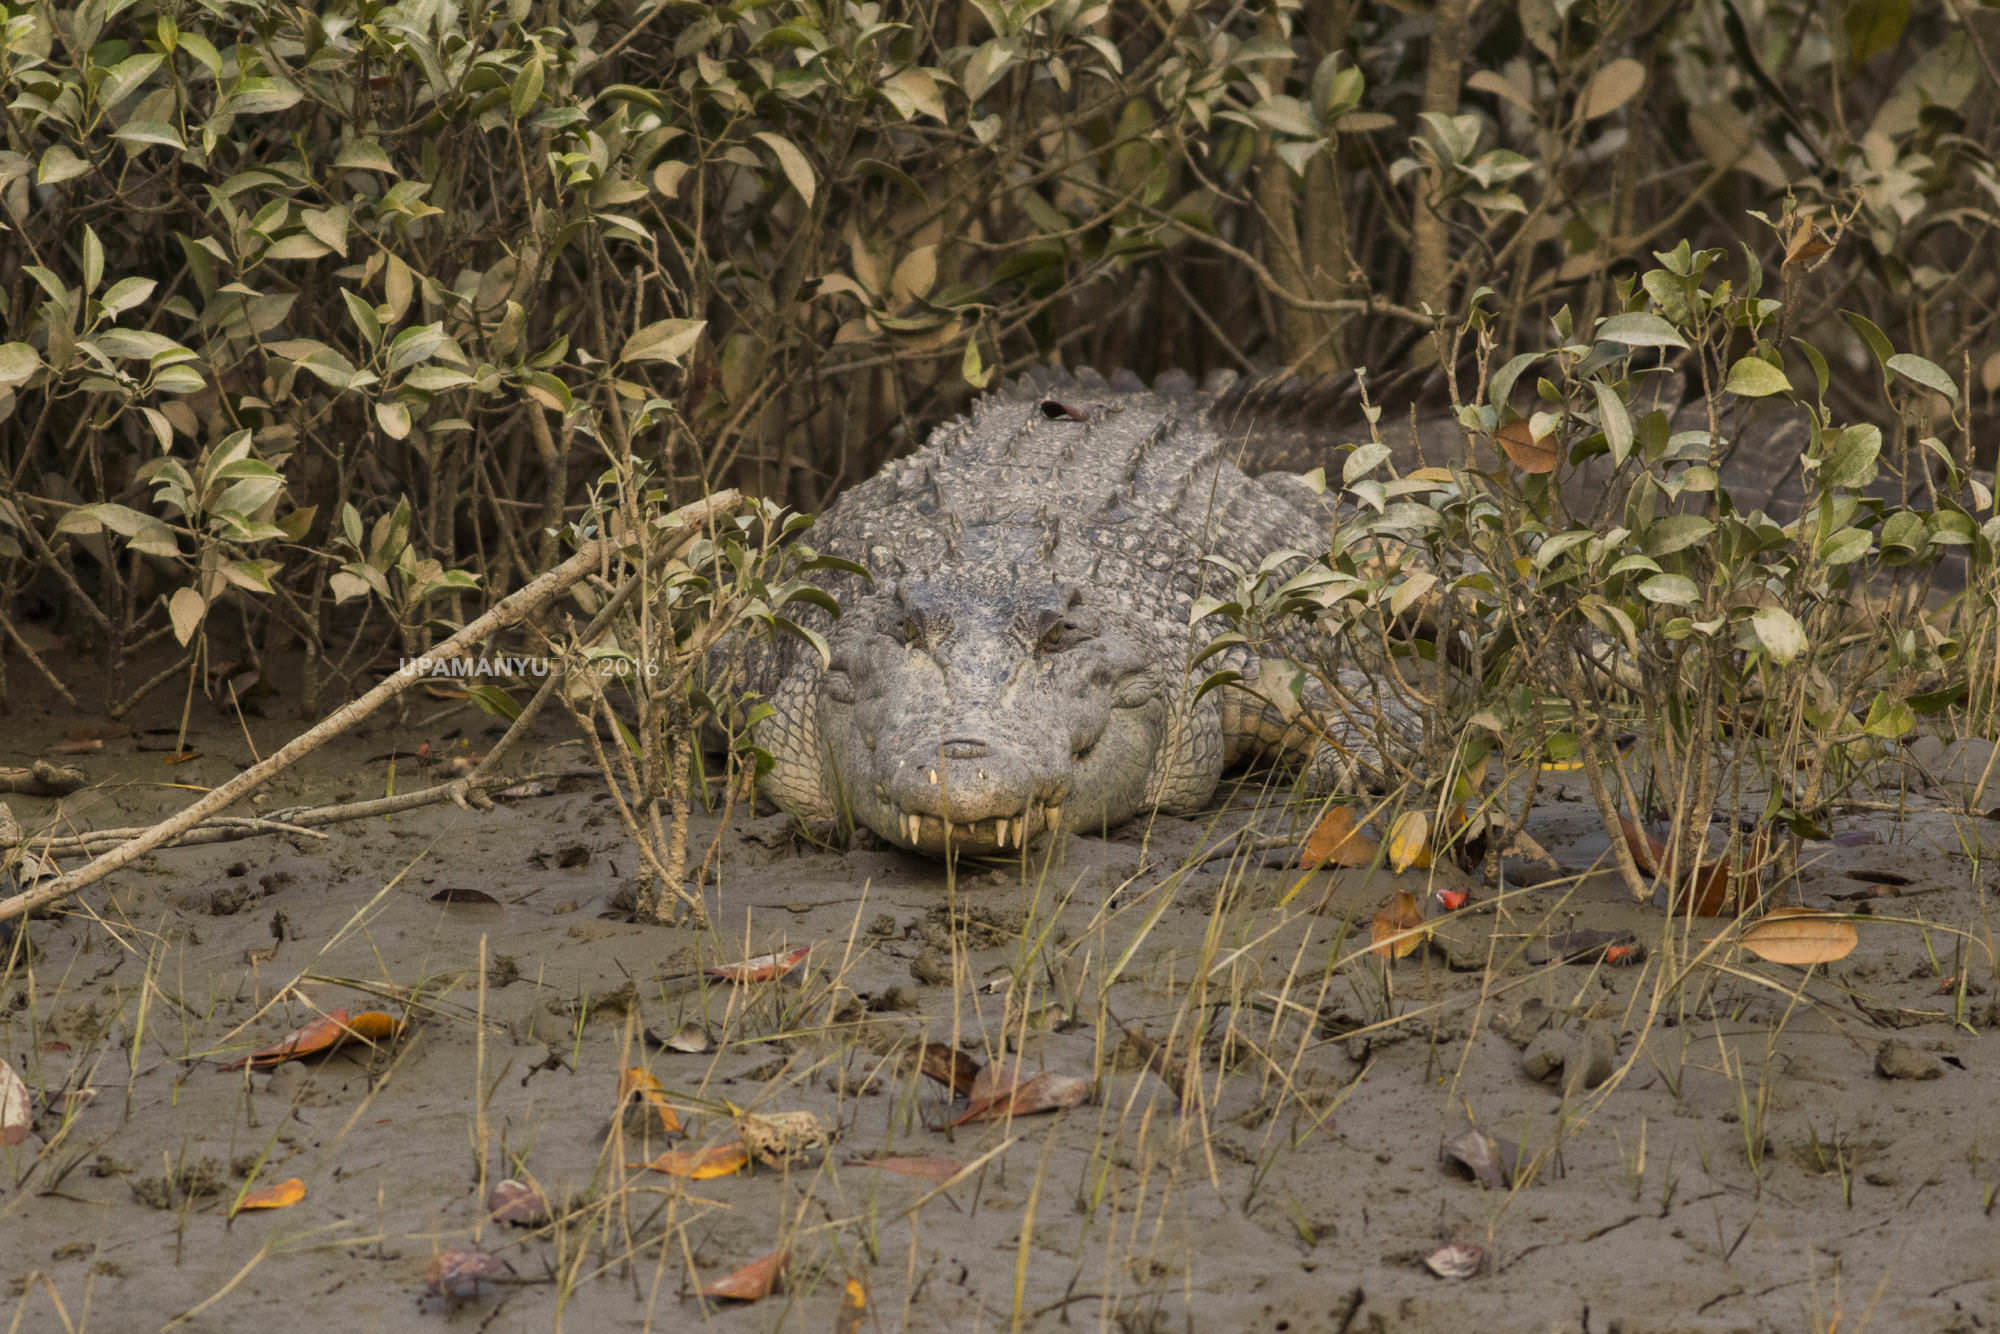 Larger Crocodile